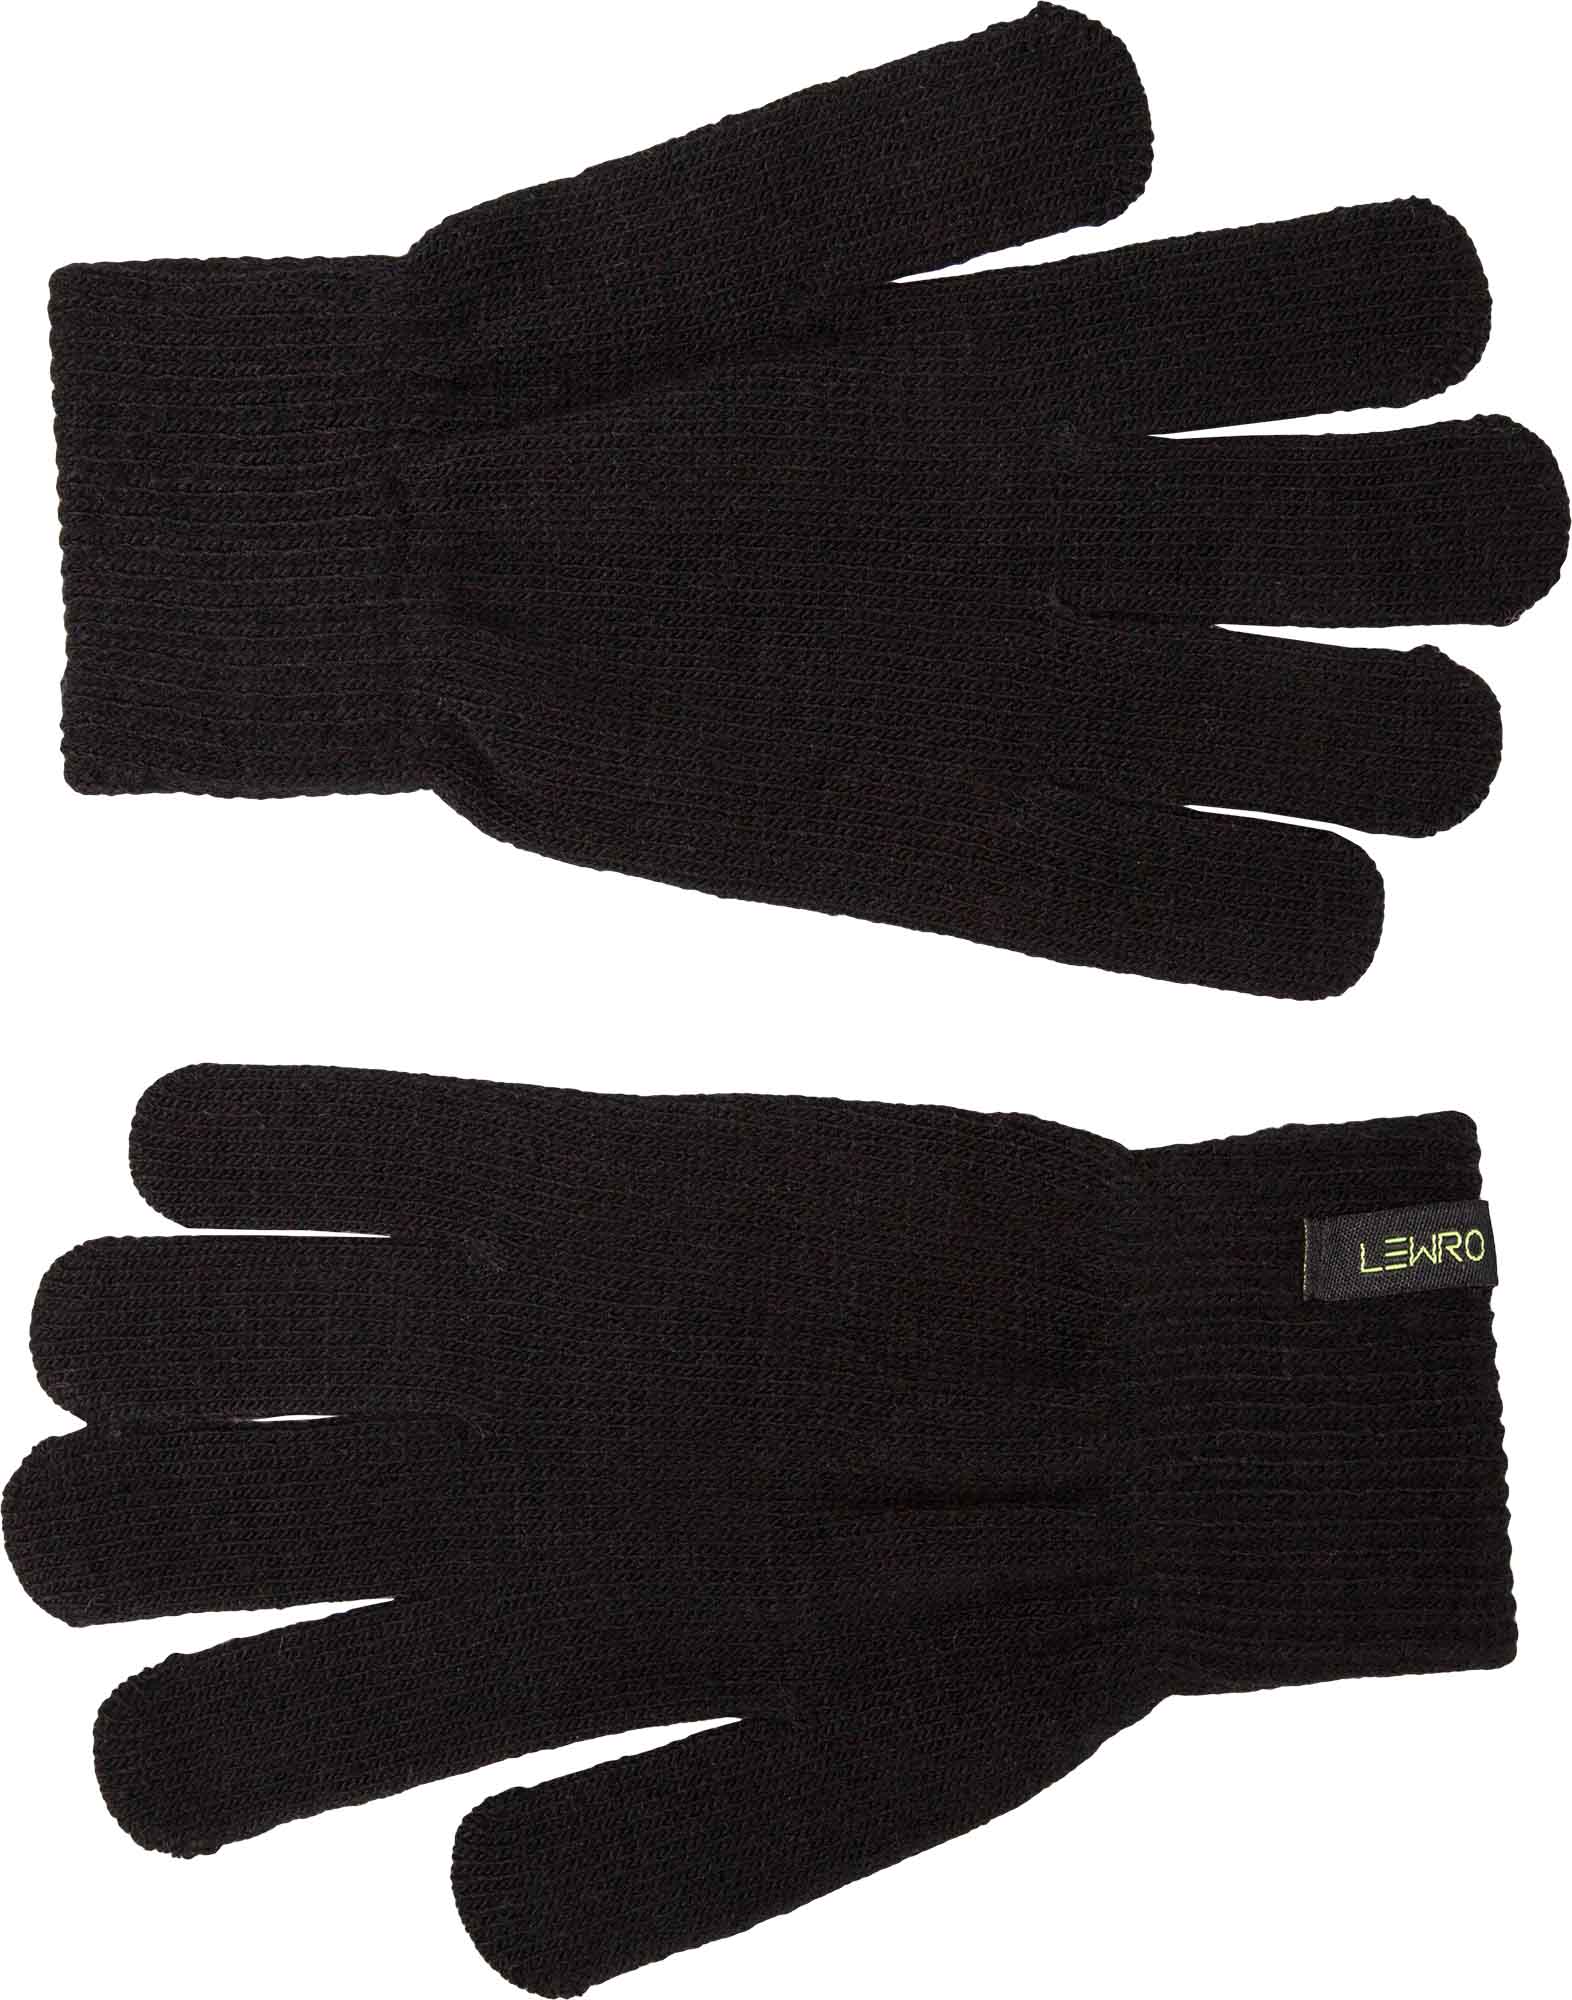 Children’s knitted gloves